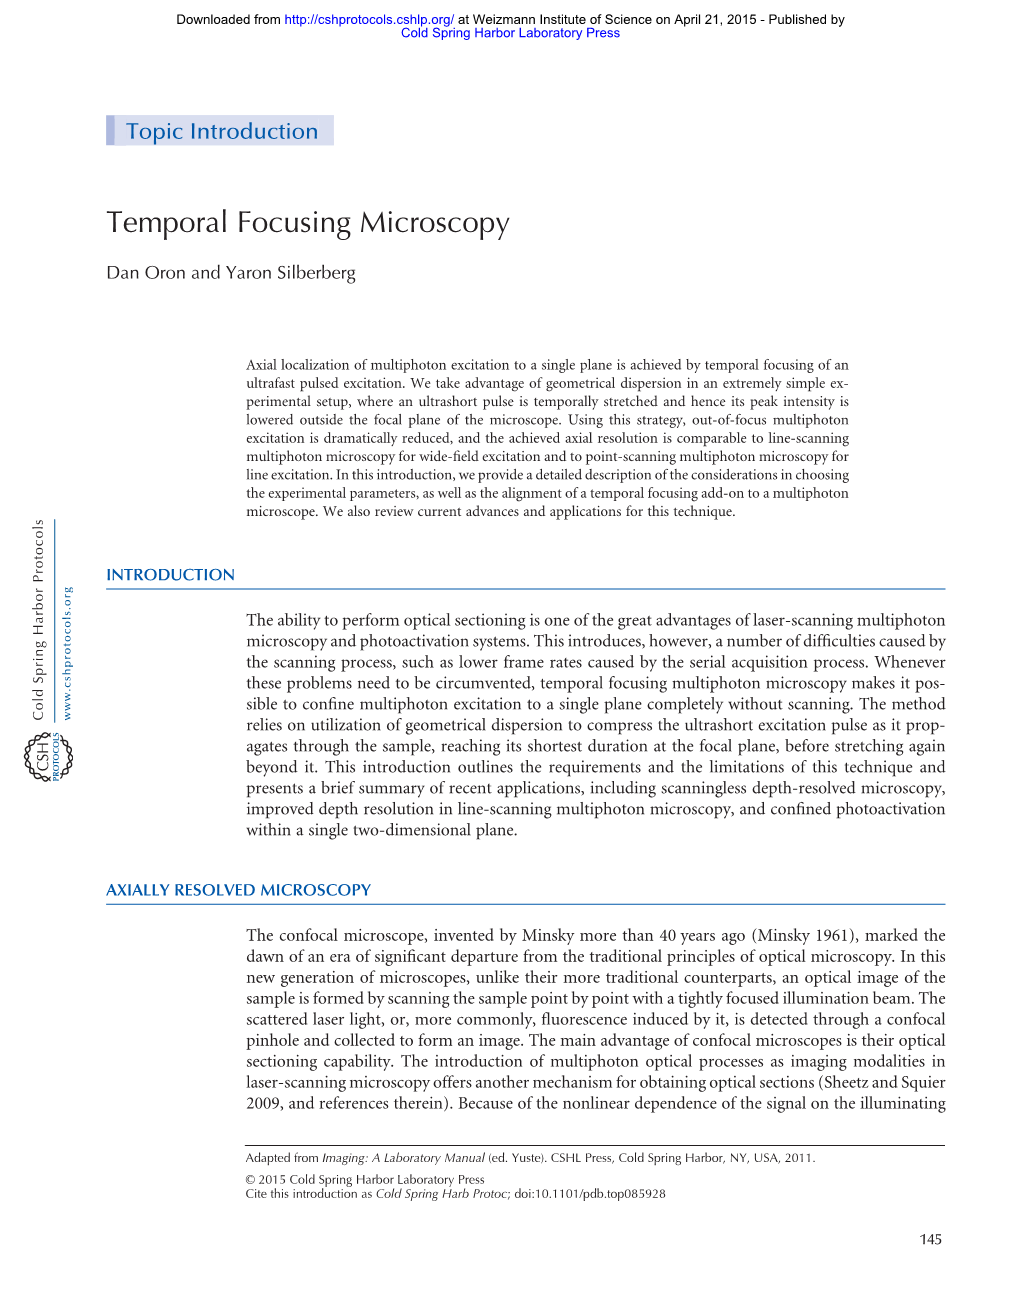 Temporal Focusing Microscopy